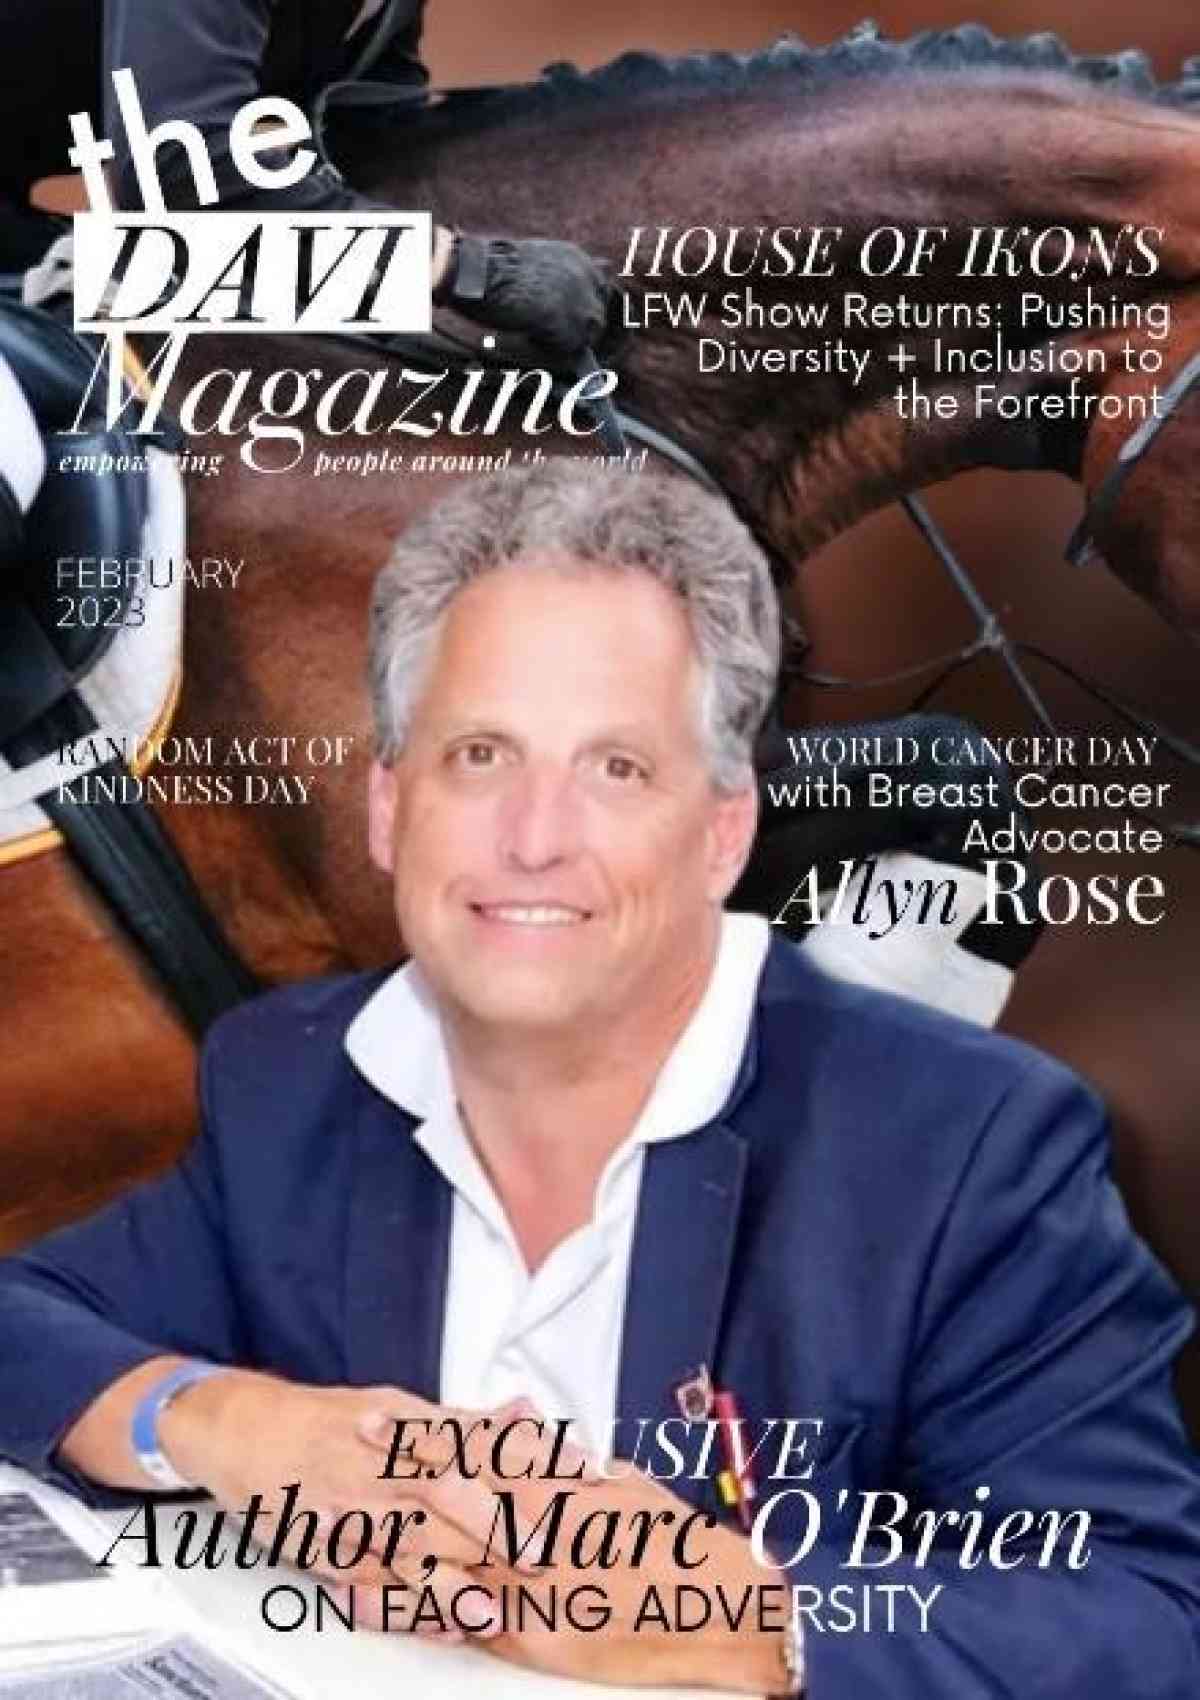 Marc O’Brien Featured by the Davi Magazine